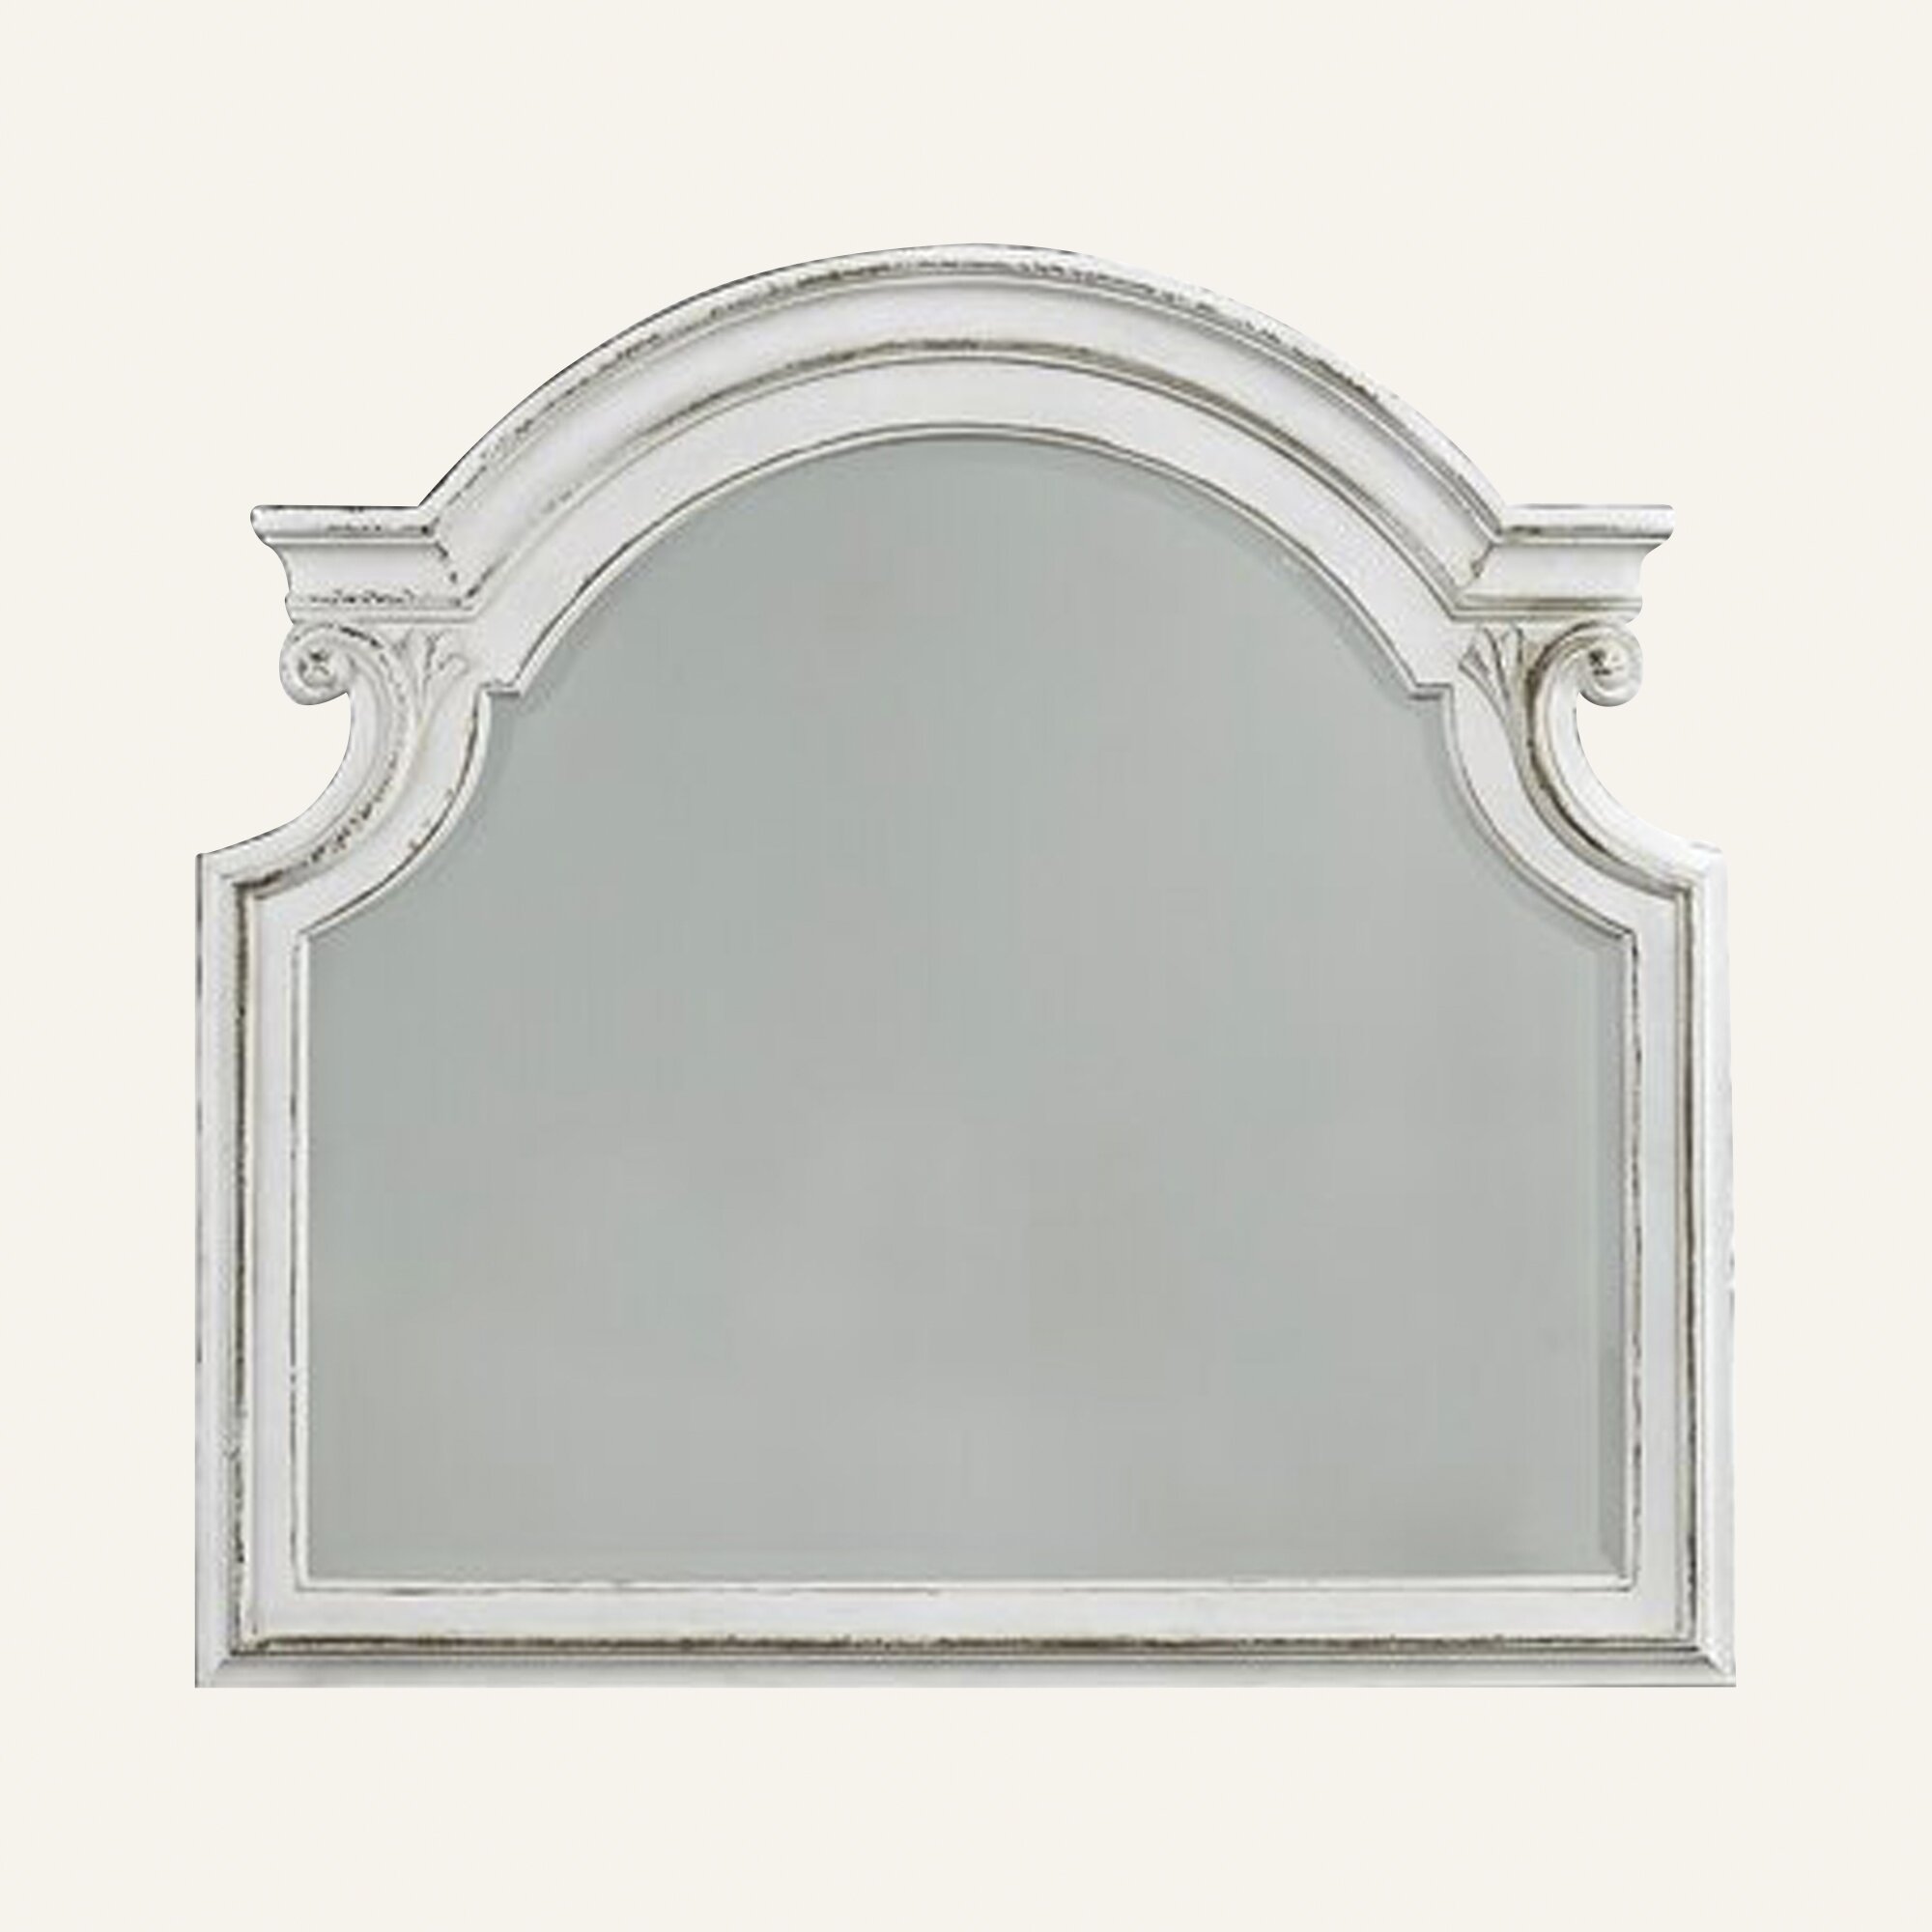 A white antique mirror.